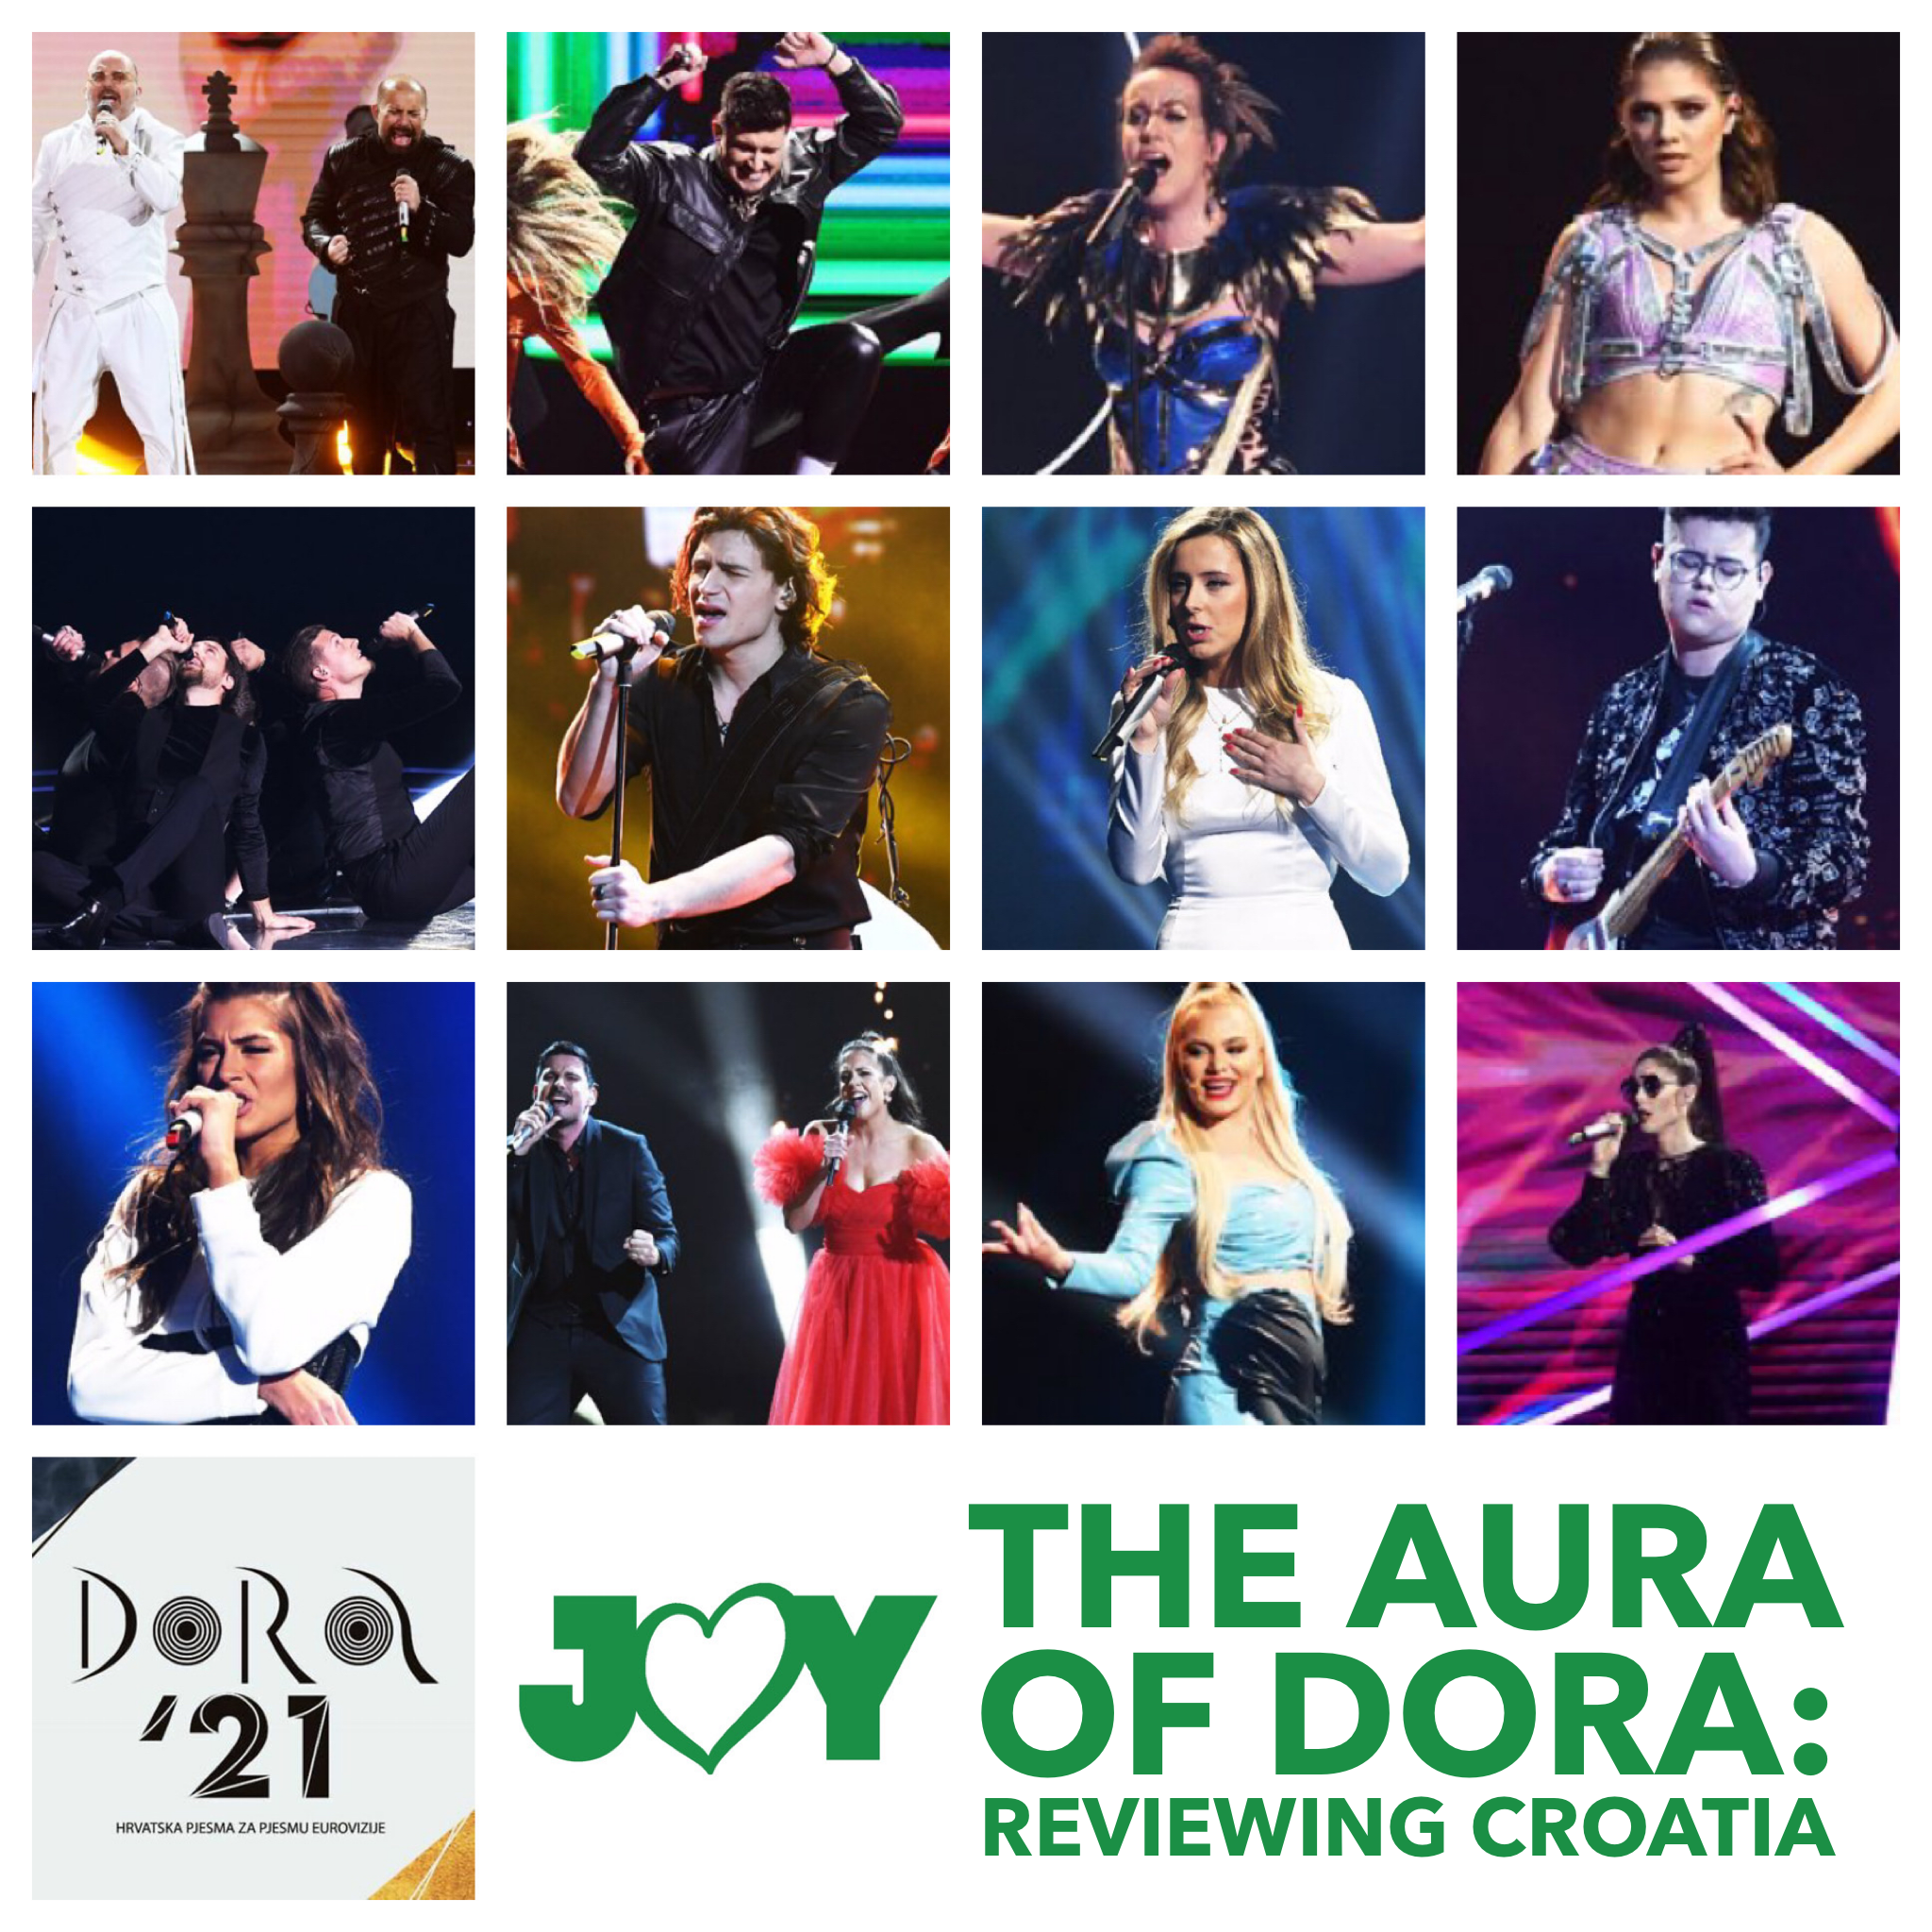 🇭🇷 The Croatian pop aura: Reviewing Dora 2021